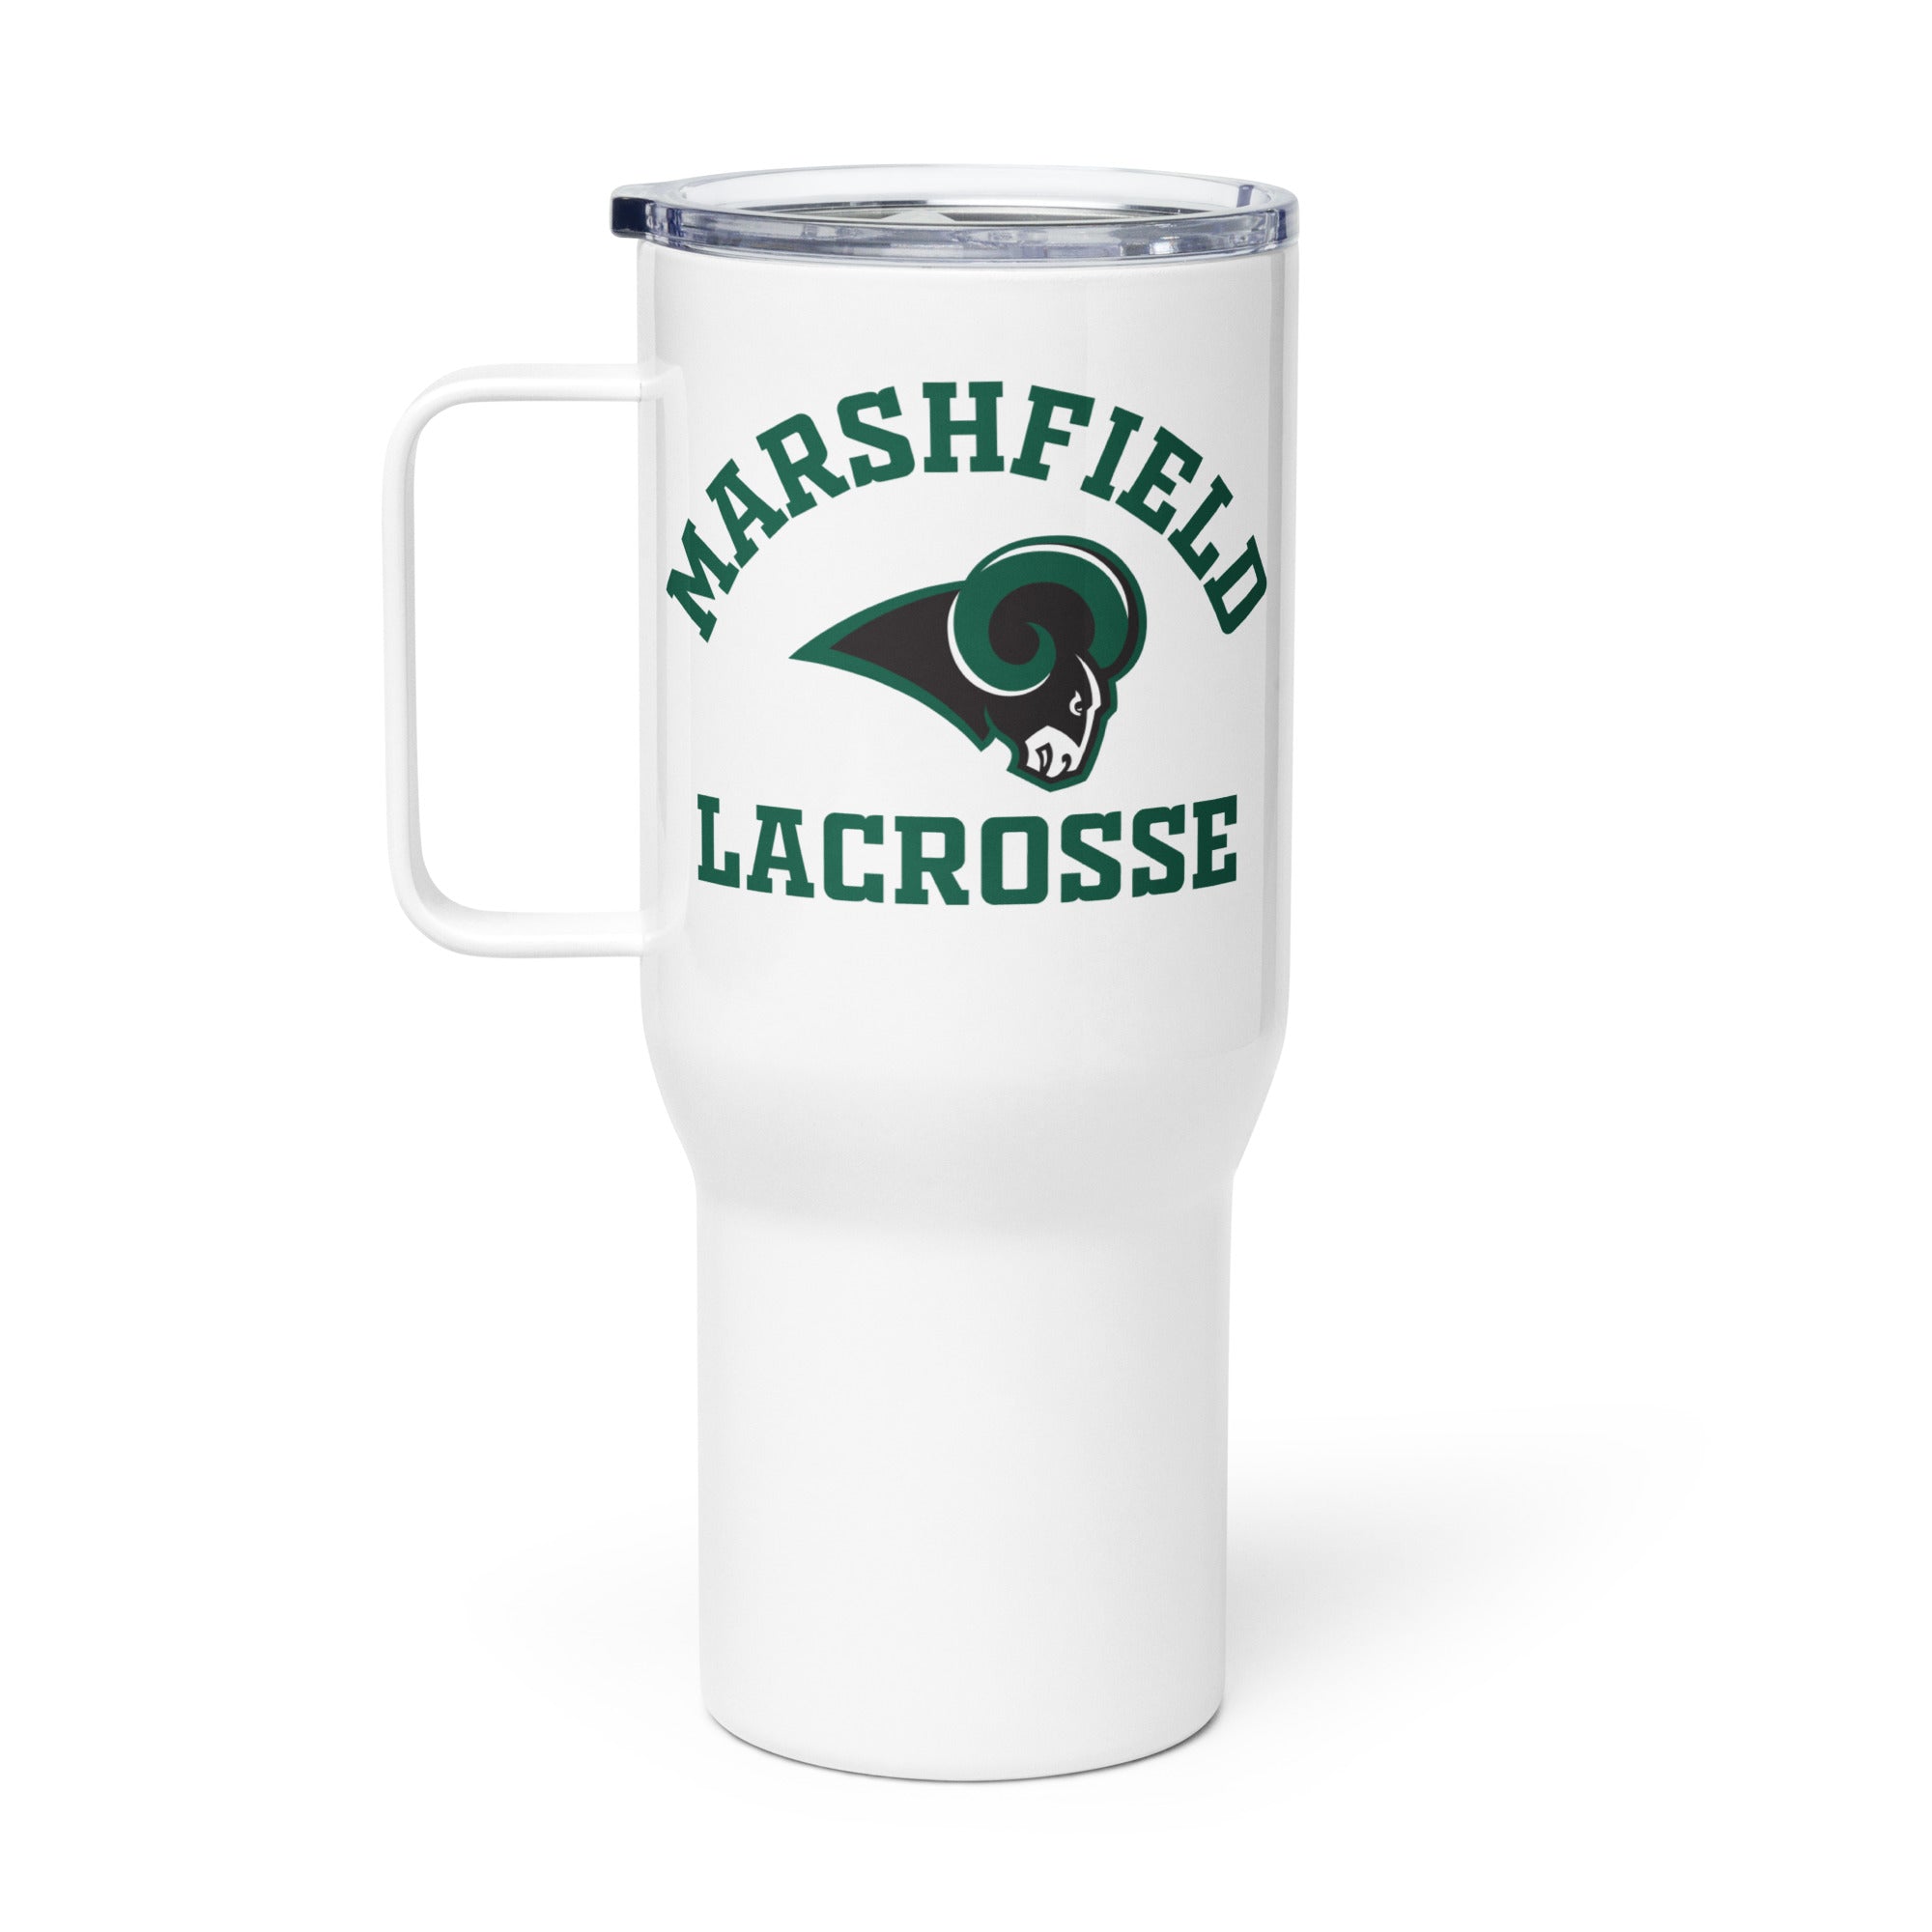 Marshfield Travel mug with a handle